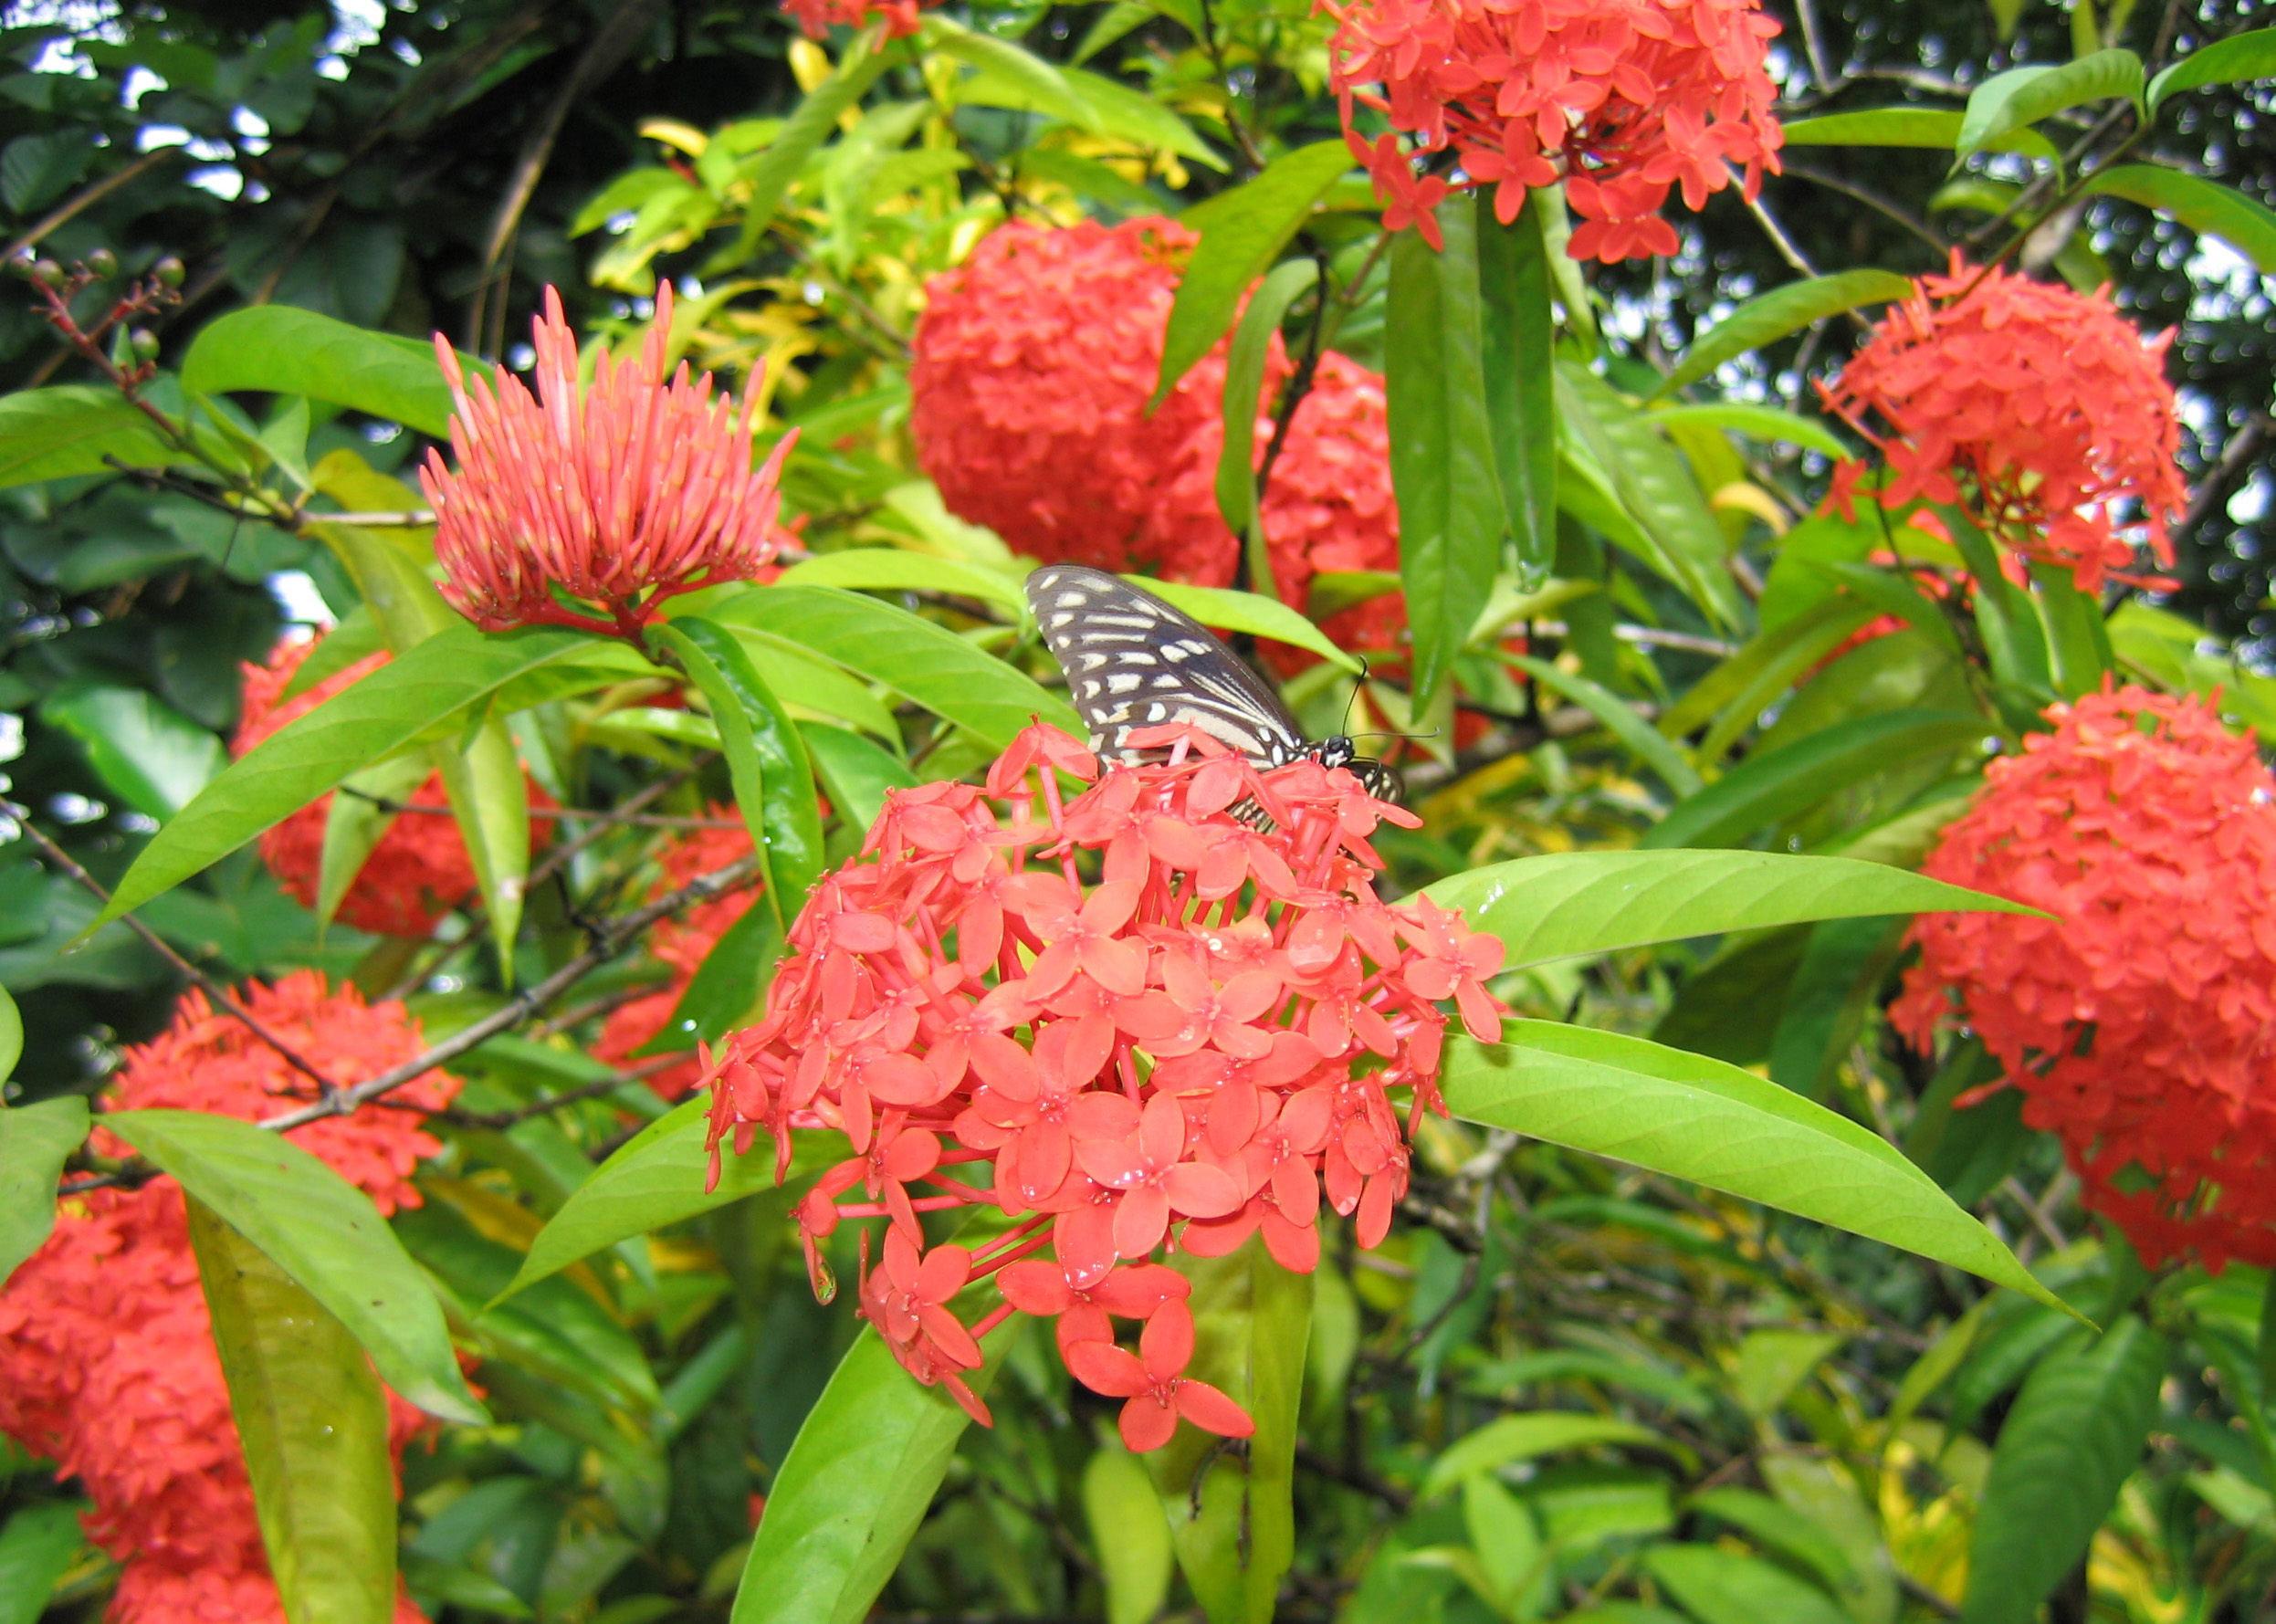 File:Ixora coccinea flower.jpg - Wikimedia Commons